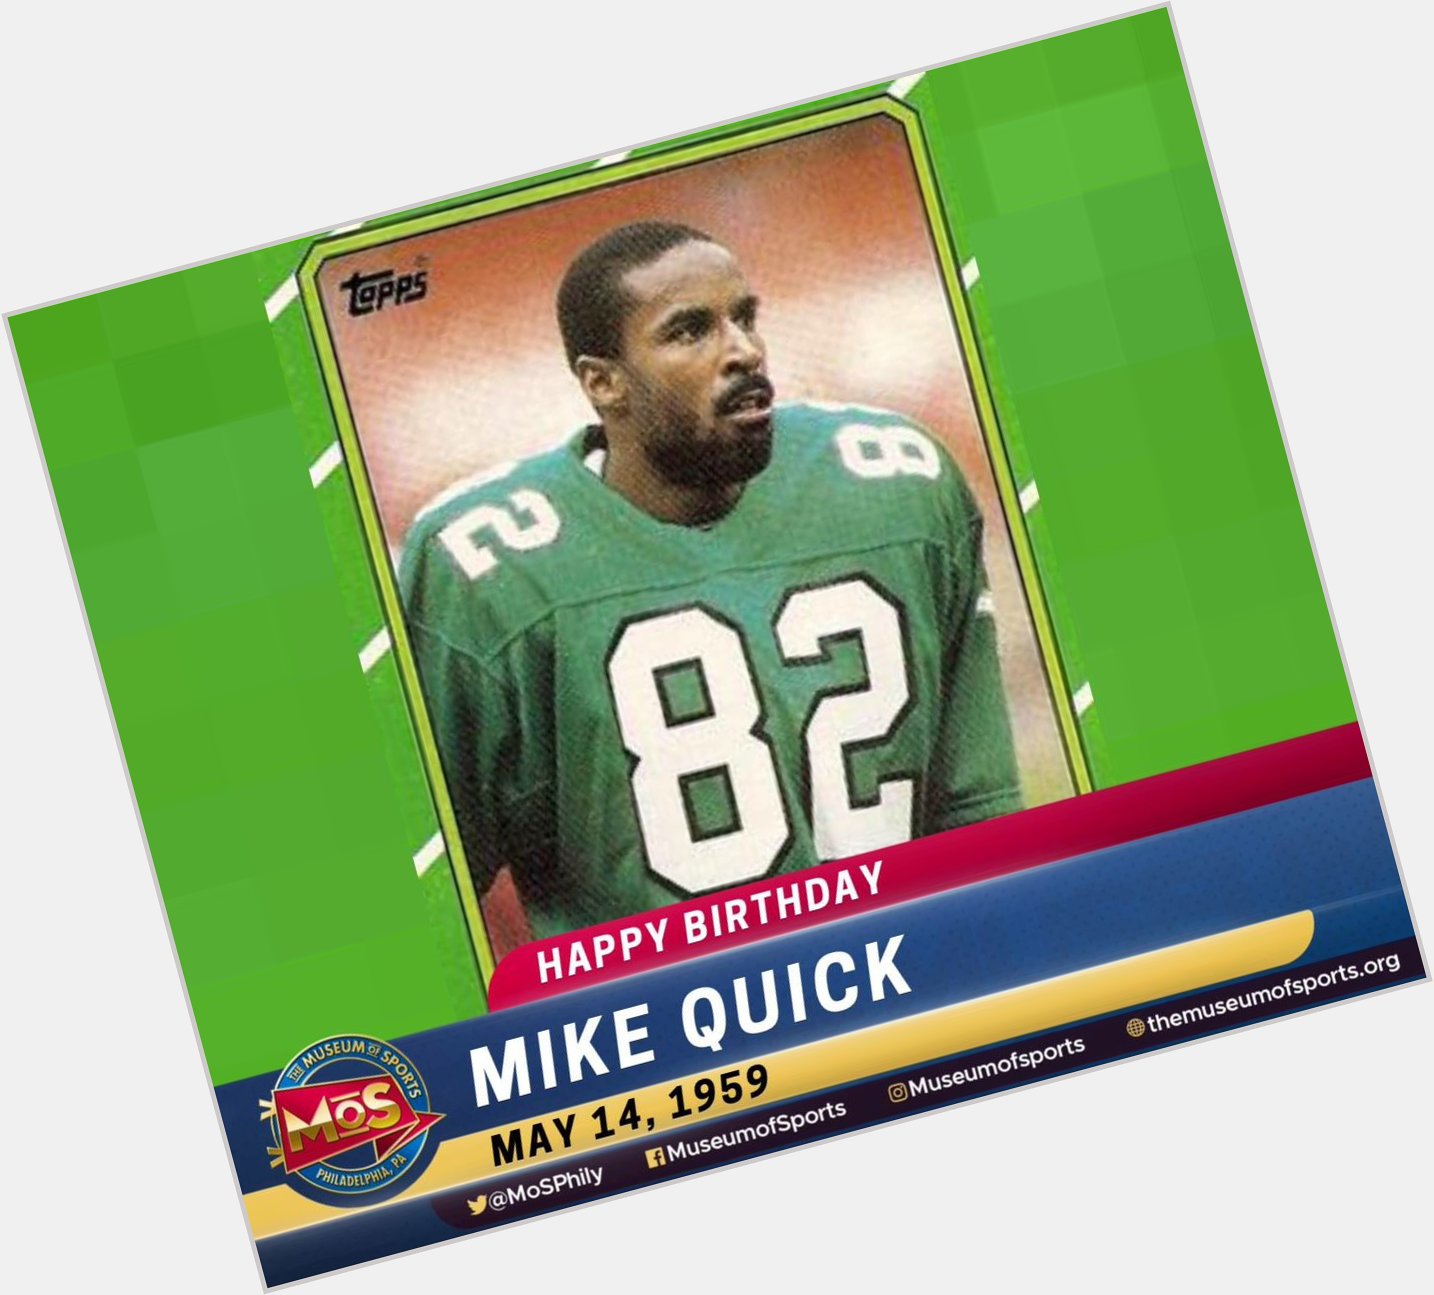 Happy Birthday, Mike Quick! 

Donate here:  